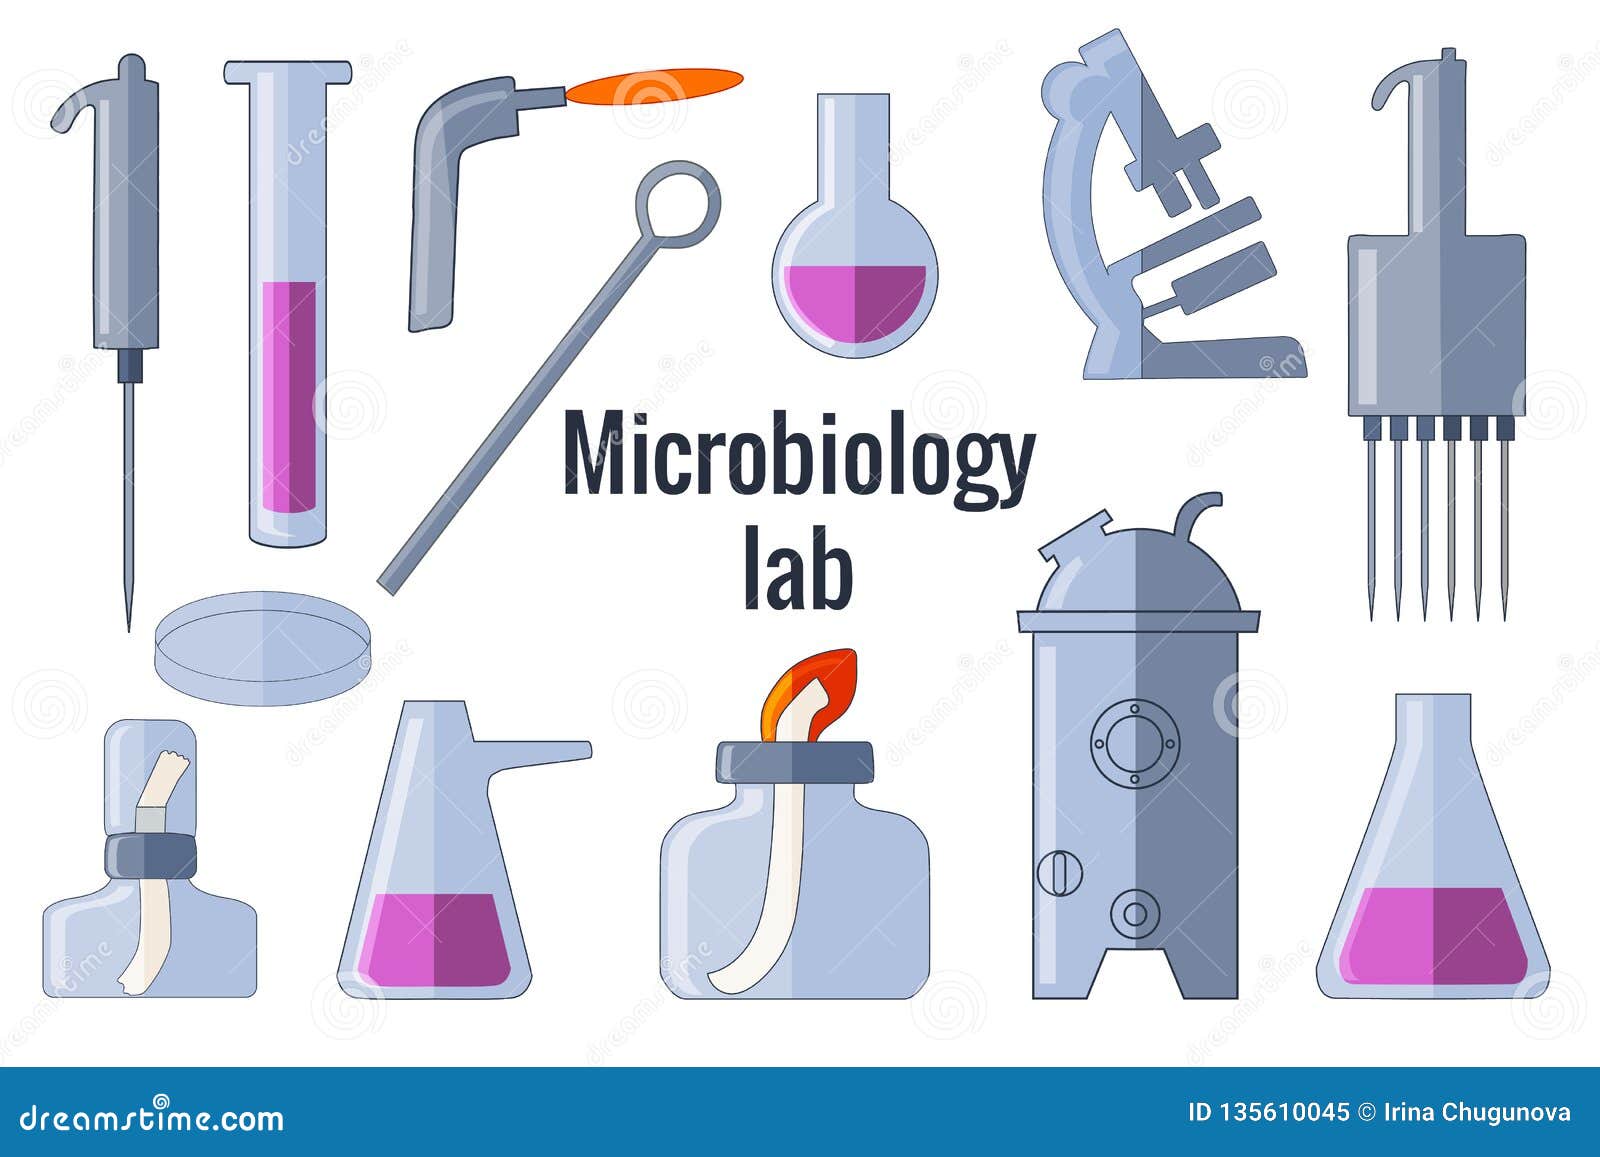 [DIAGRAM] Diagrams Of Microbiology Laboratory Equipments - MYDIAGRAM.ONLINE